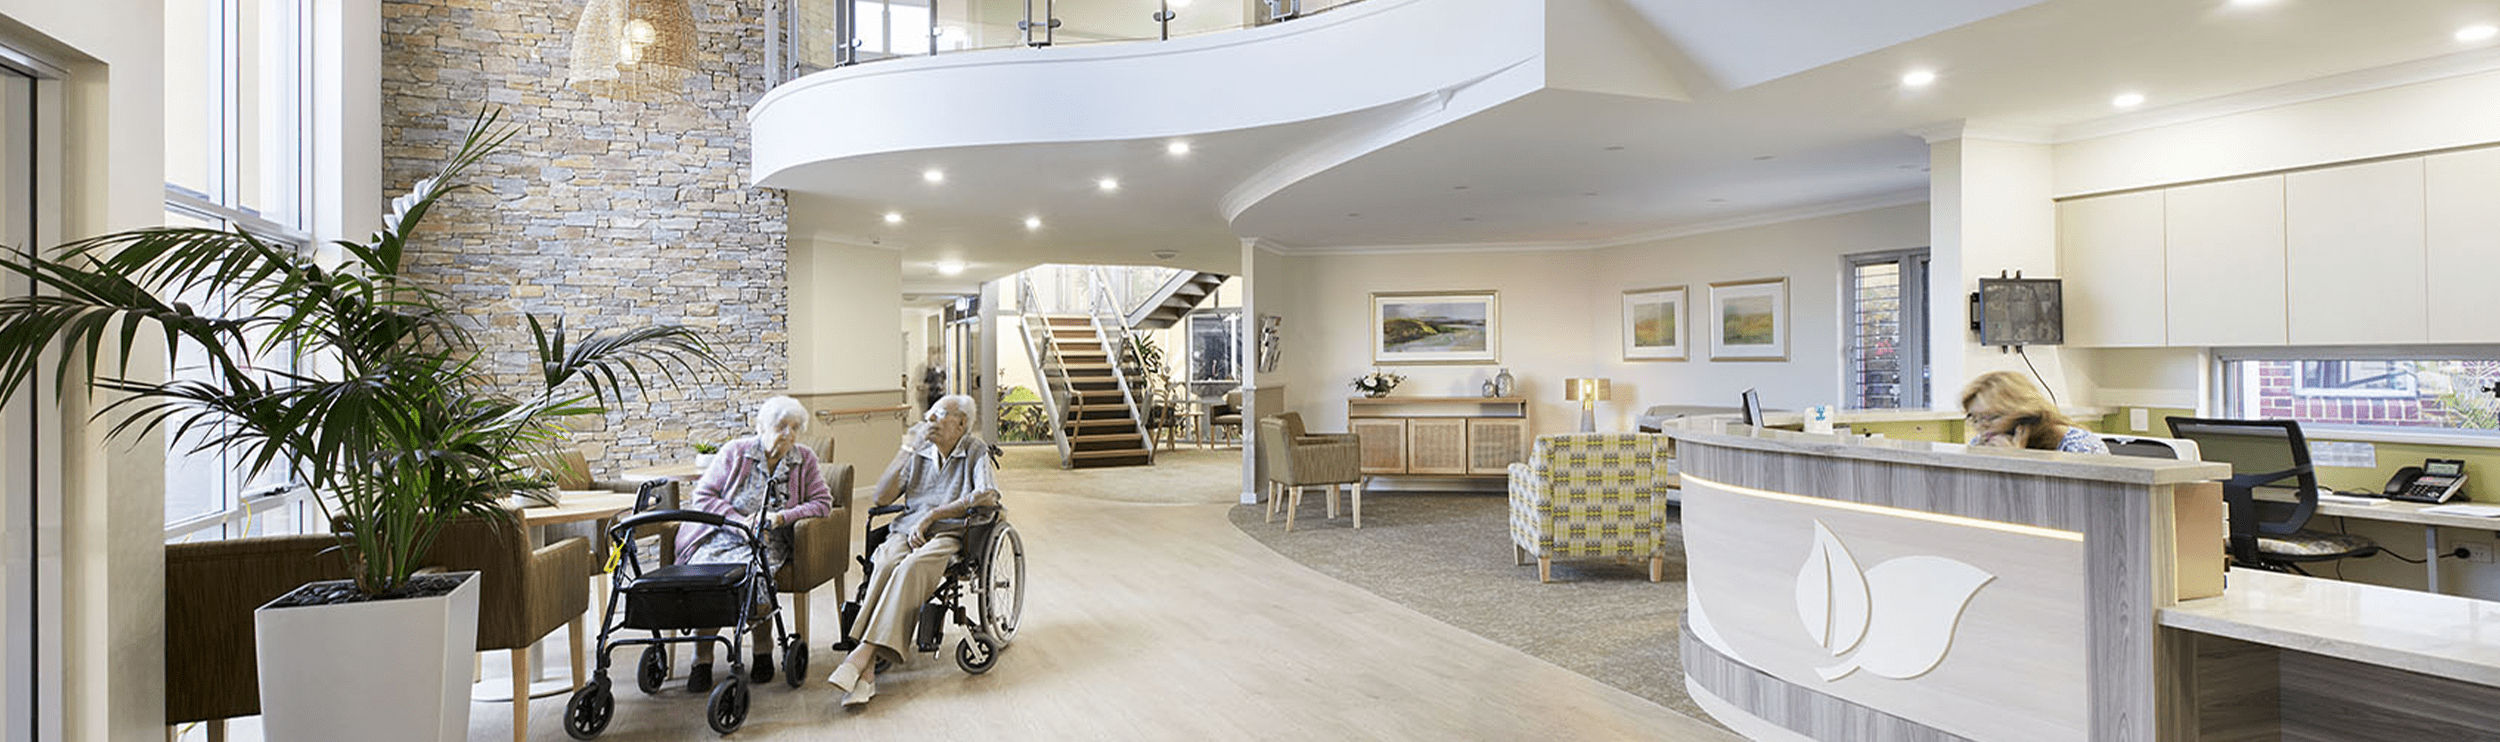 amaroo aged care facility architect-min.png